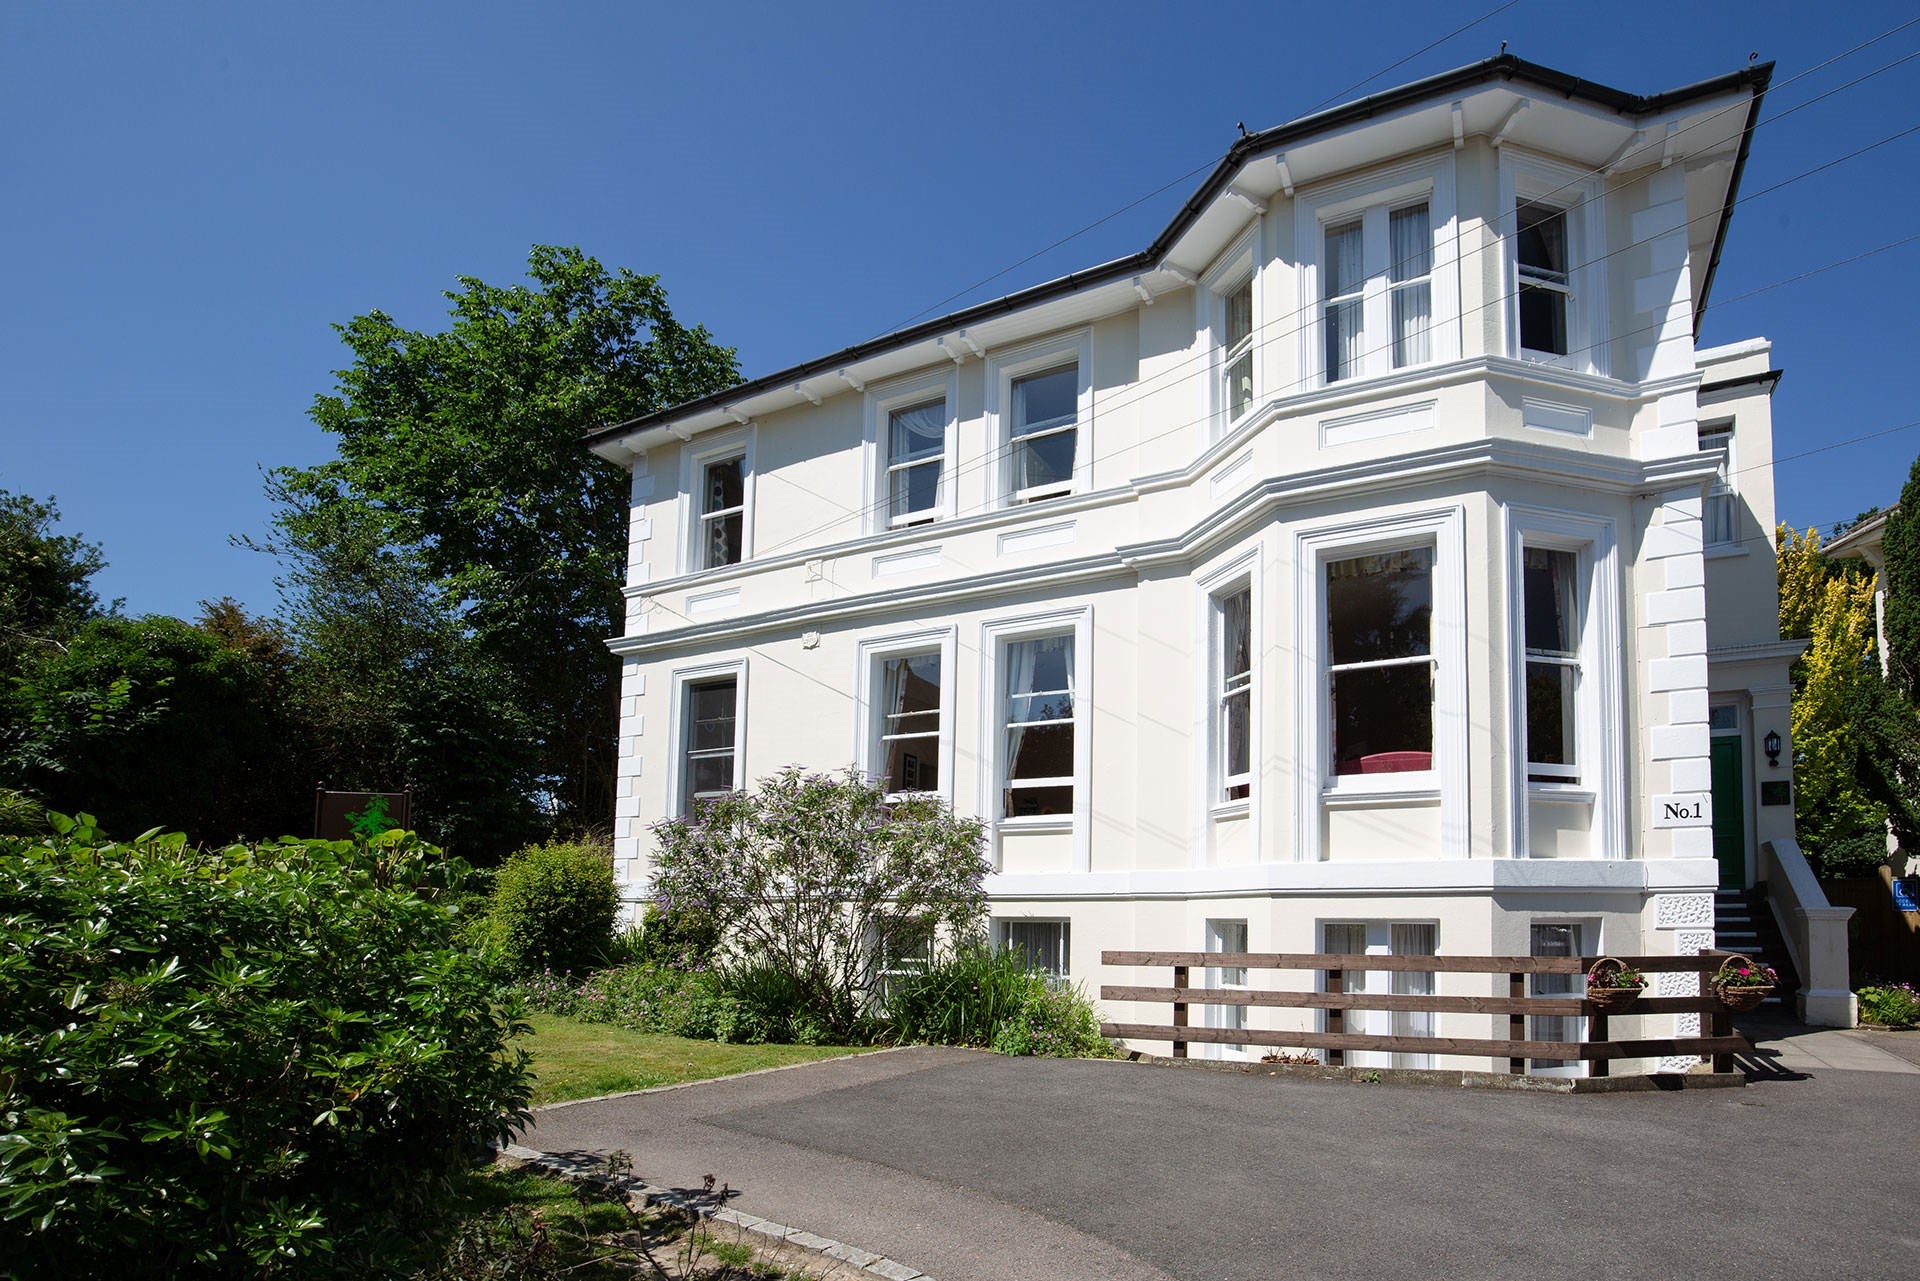 Beulah Lodge Residential Home in Tunbridge Wells